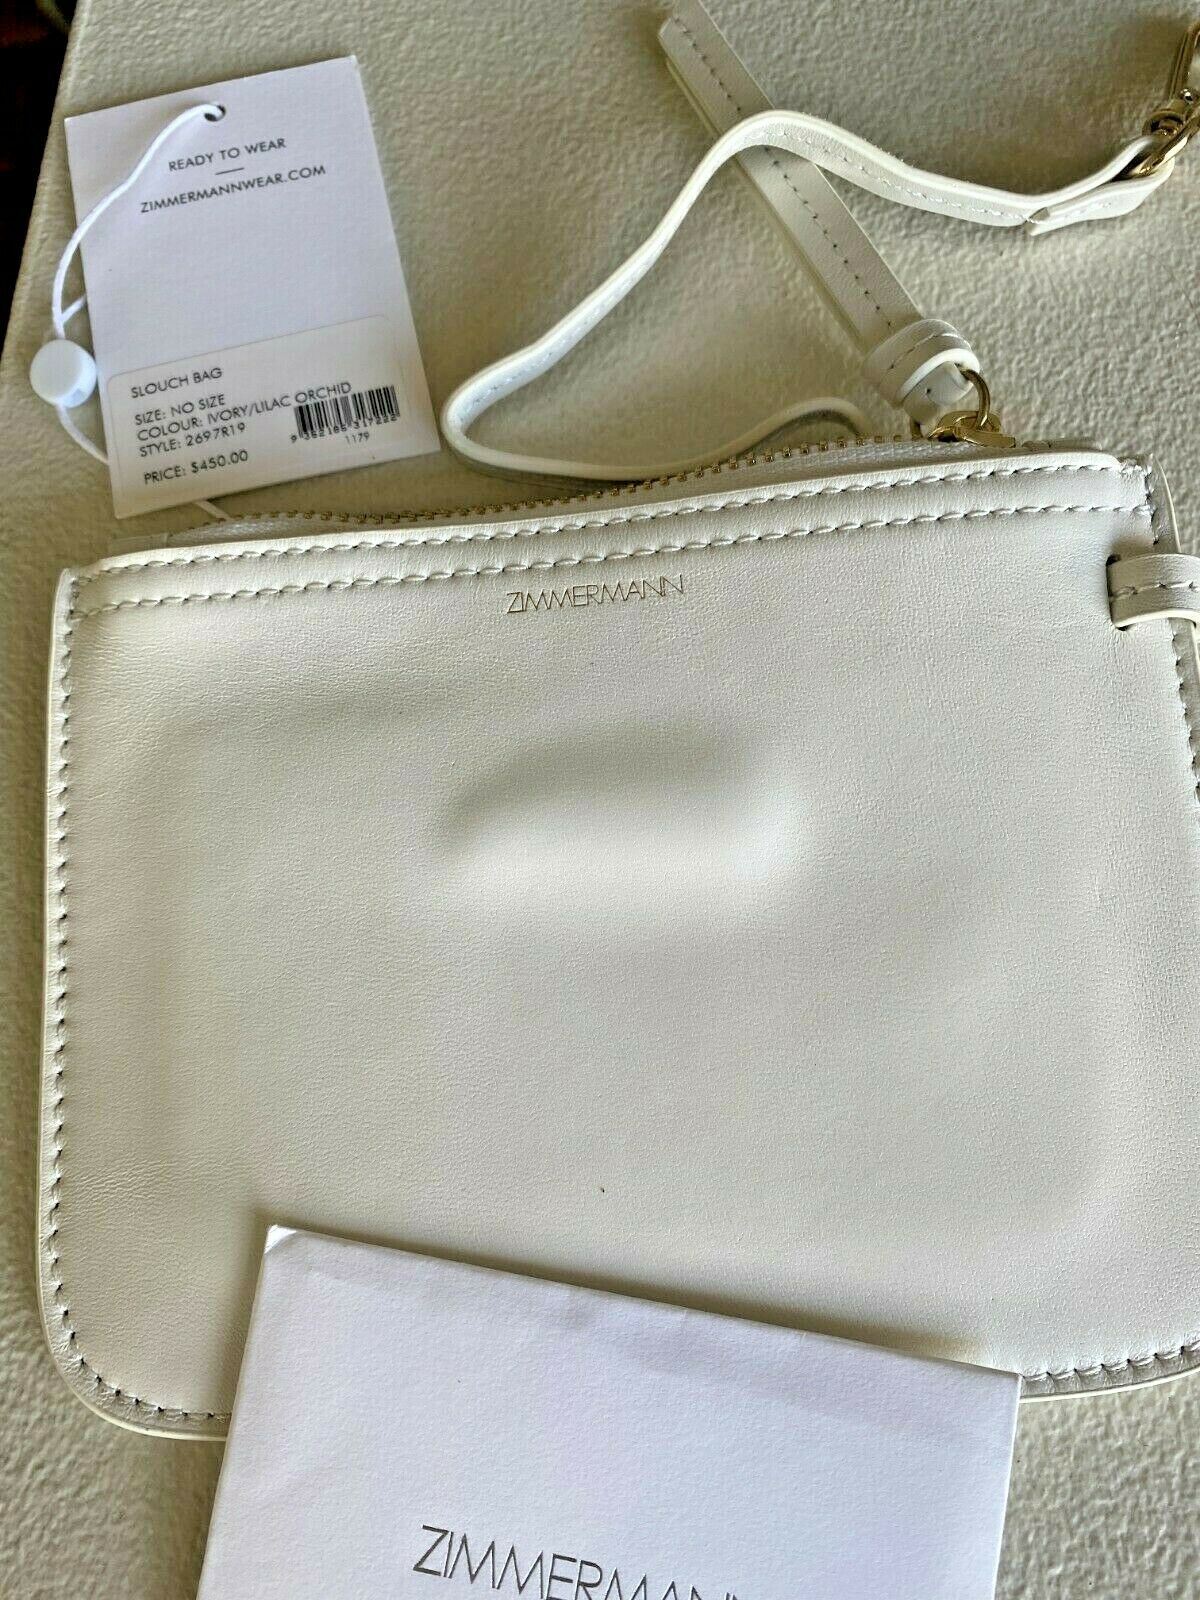 Zimmermann Slouch Bag | Crossbody, Silk, Leather Wallet, Handbag Floral $650 RRP